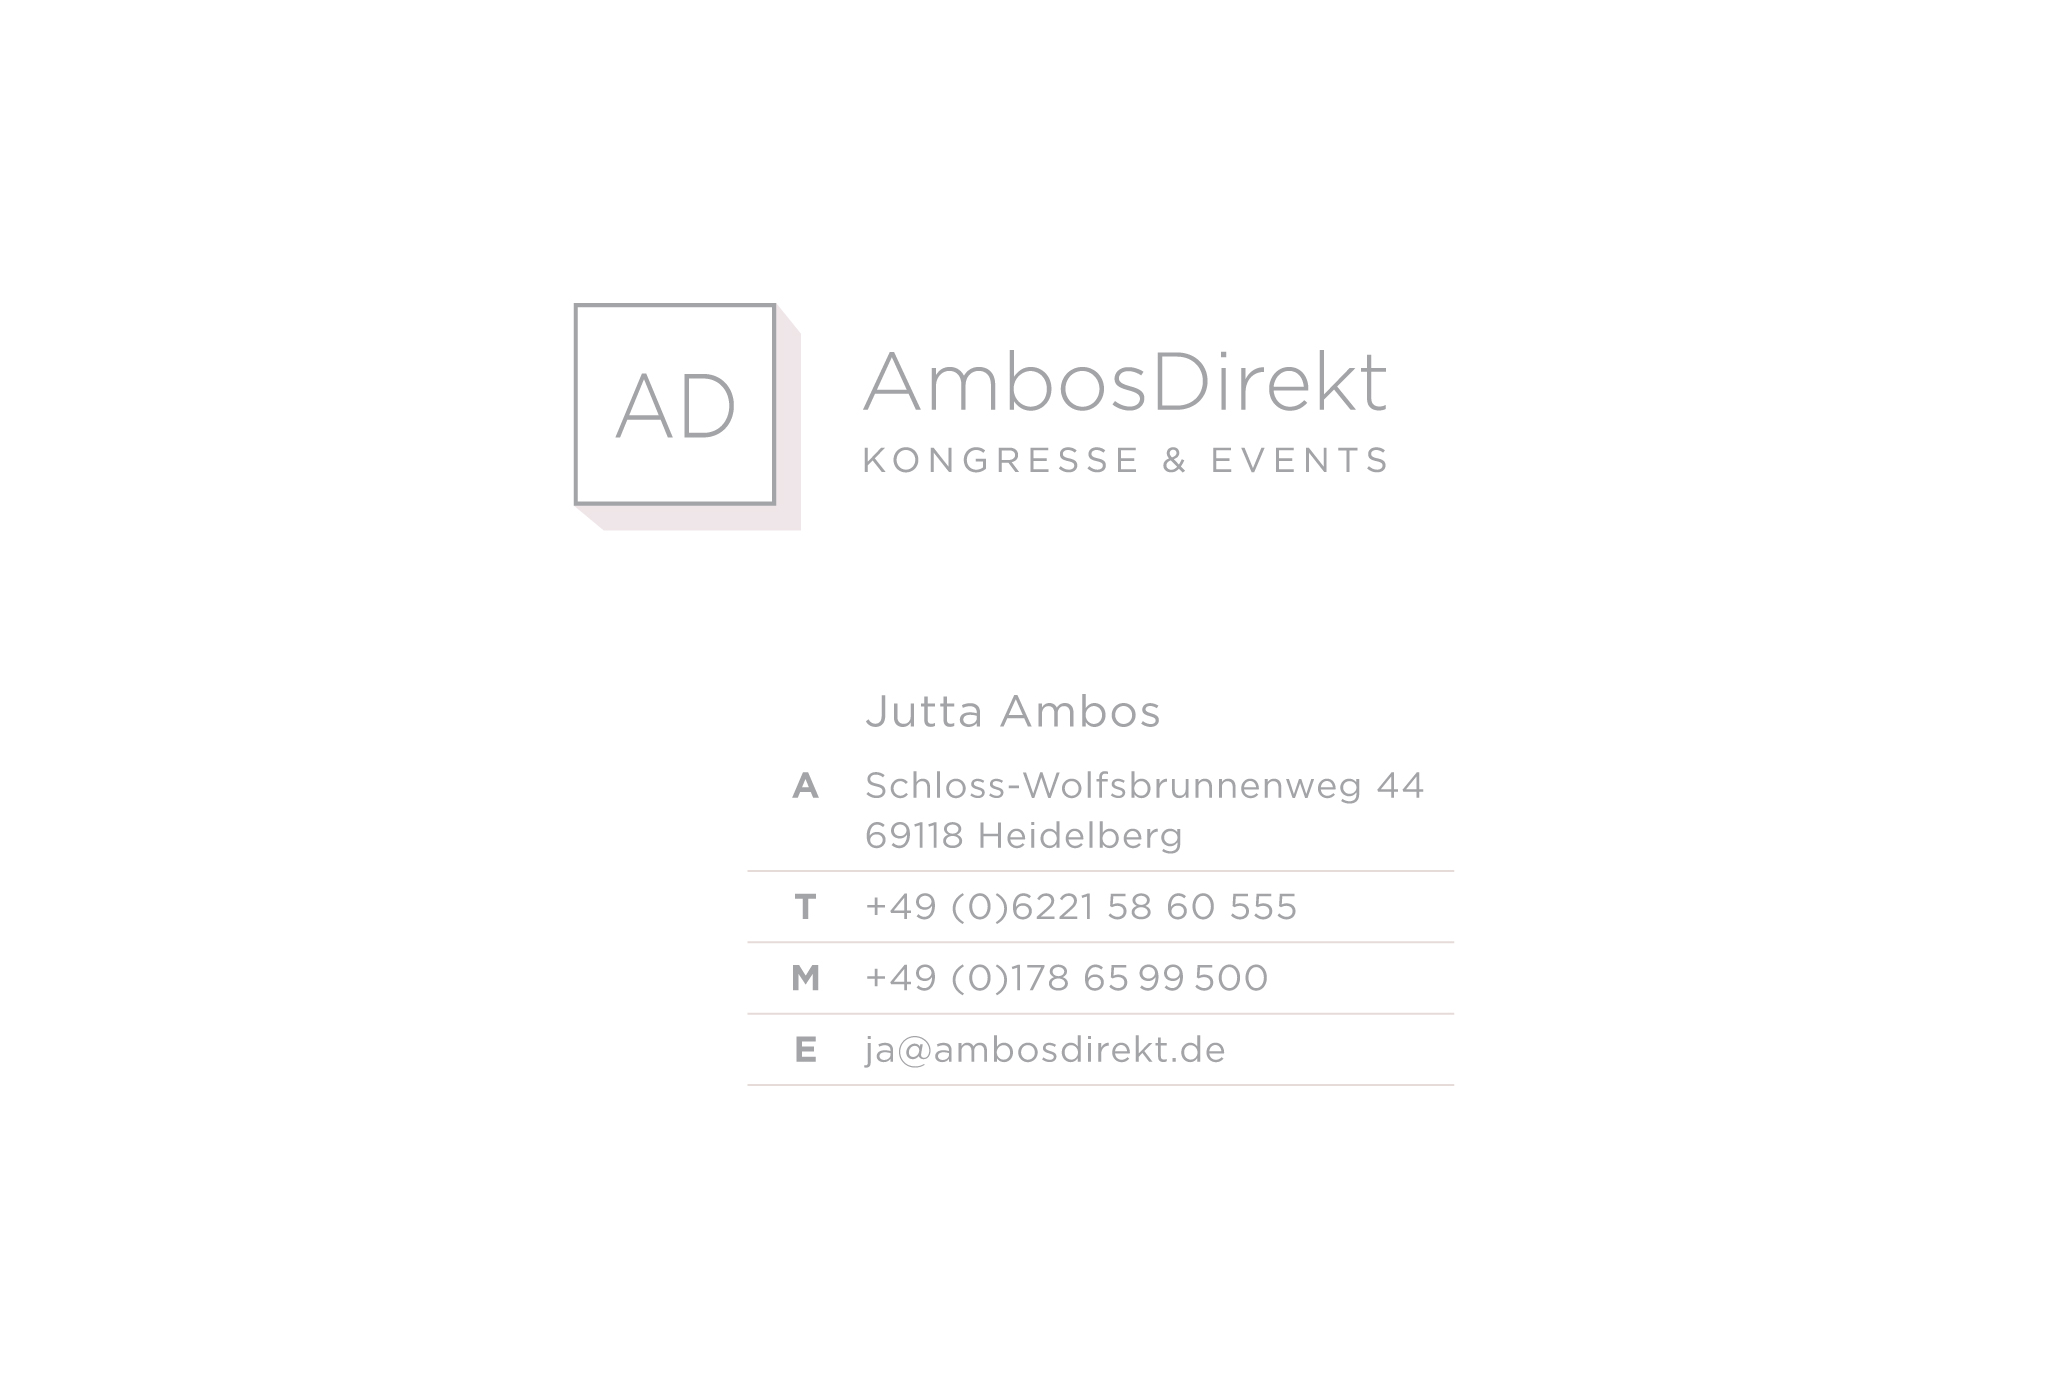 AmbosDirekt - Kongresse & Events - Jutta Ambos, Schloss-Wolfsbrunnenweg 44, 69118 Heidelberg - T +49(0)6221 58 60 555, M +49(0)178 65 99 500, E ja@ambosdirekt.de